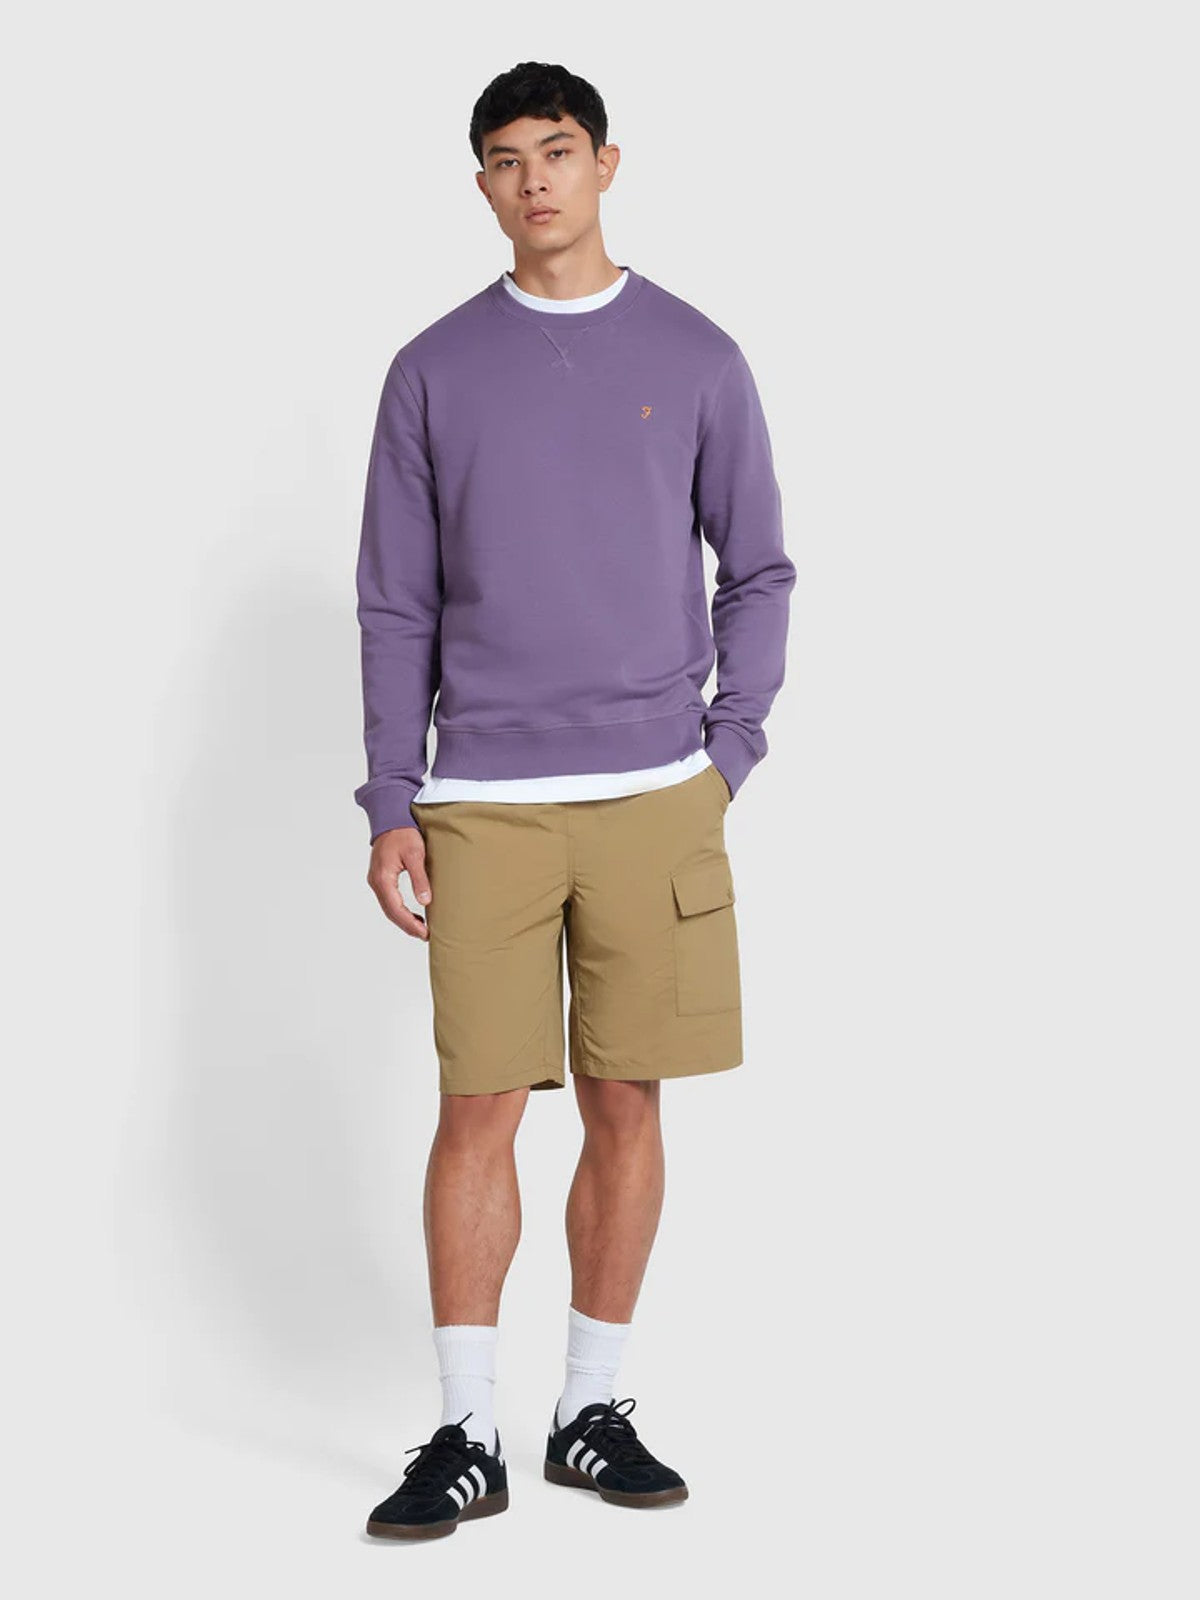 Tim Purple Sweatshirt